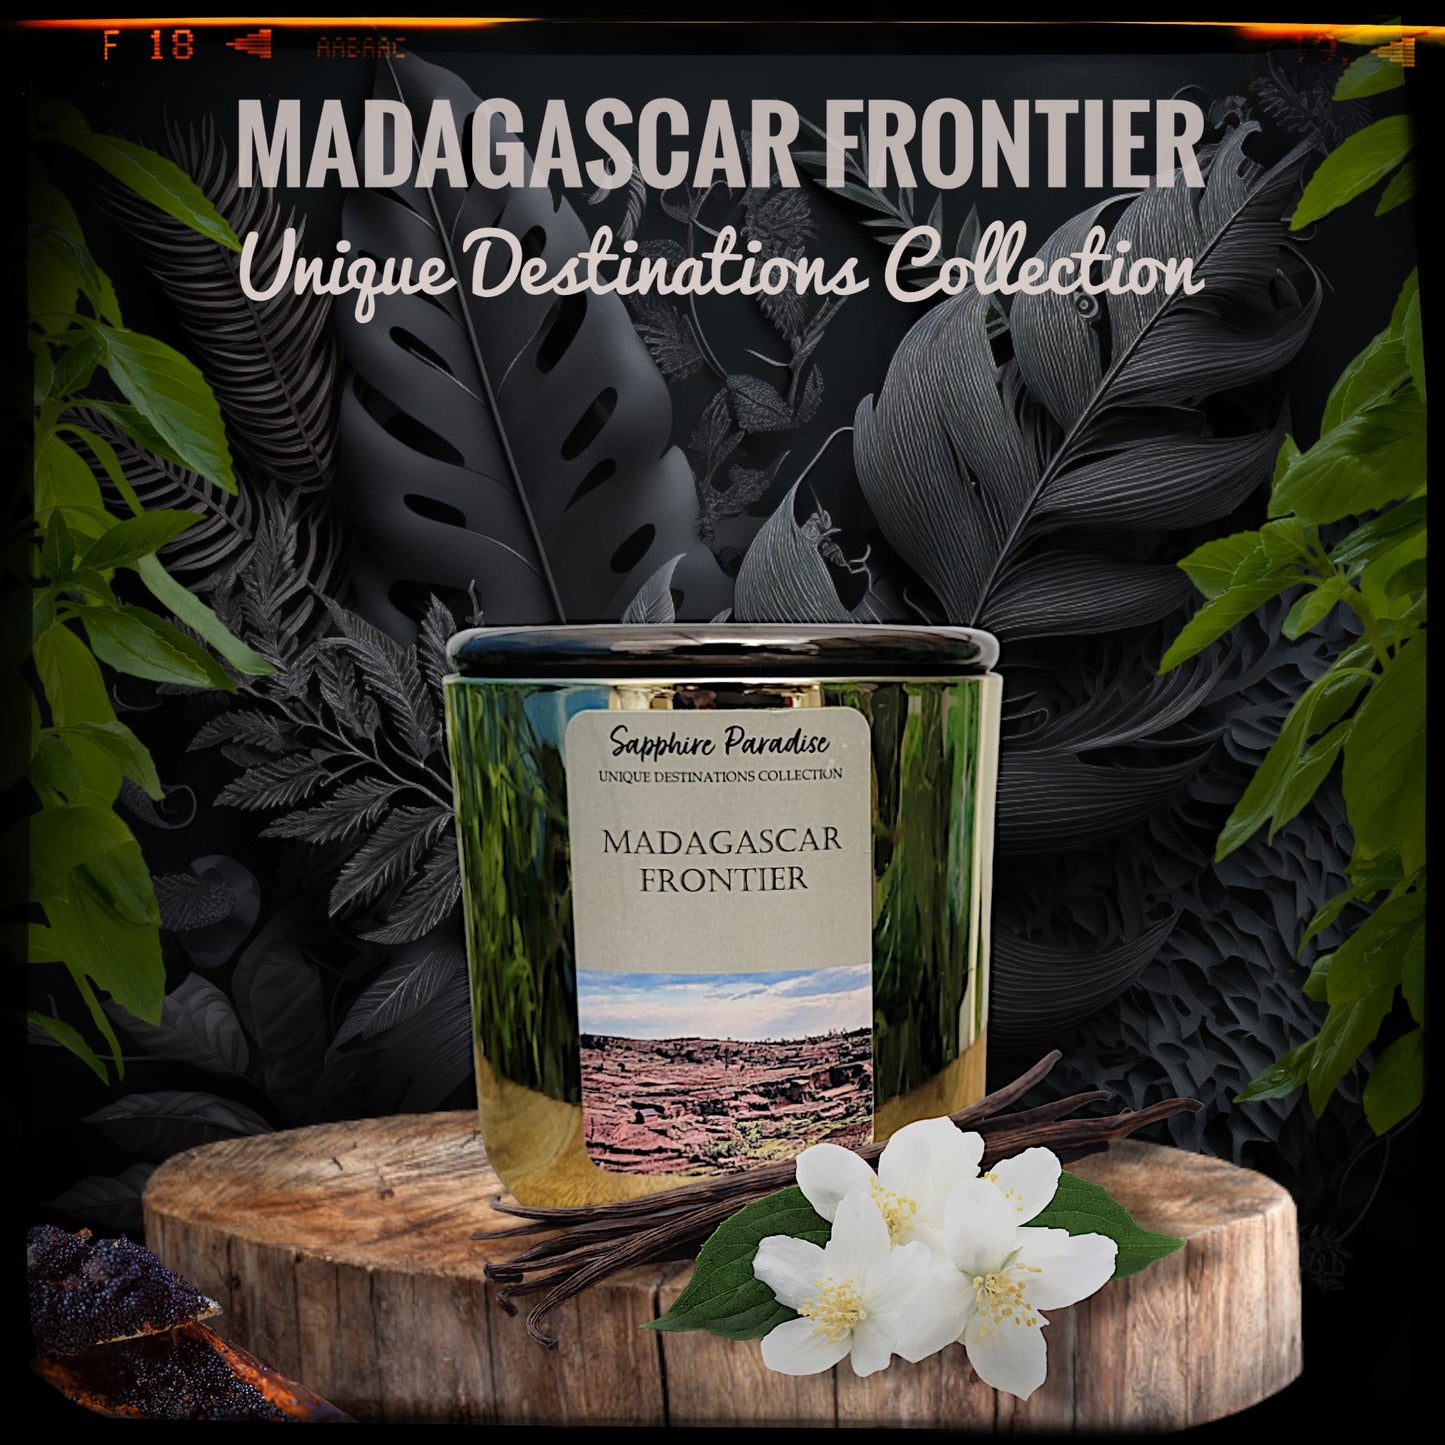 Madagascar Frontier